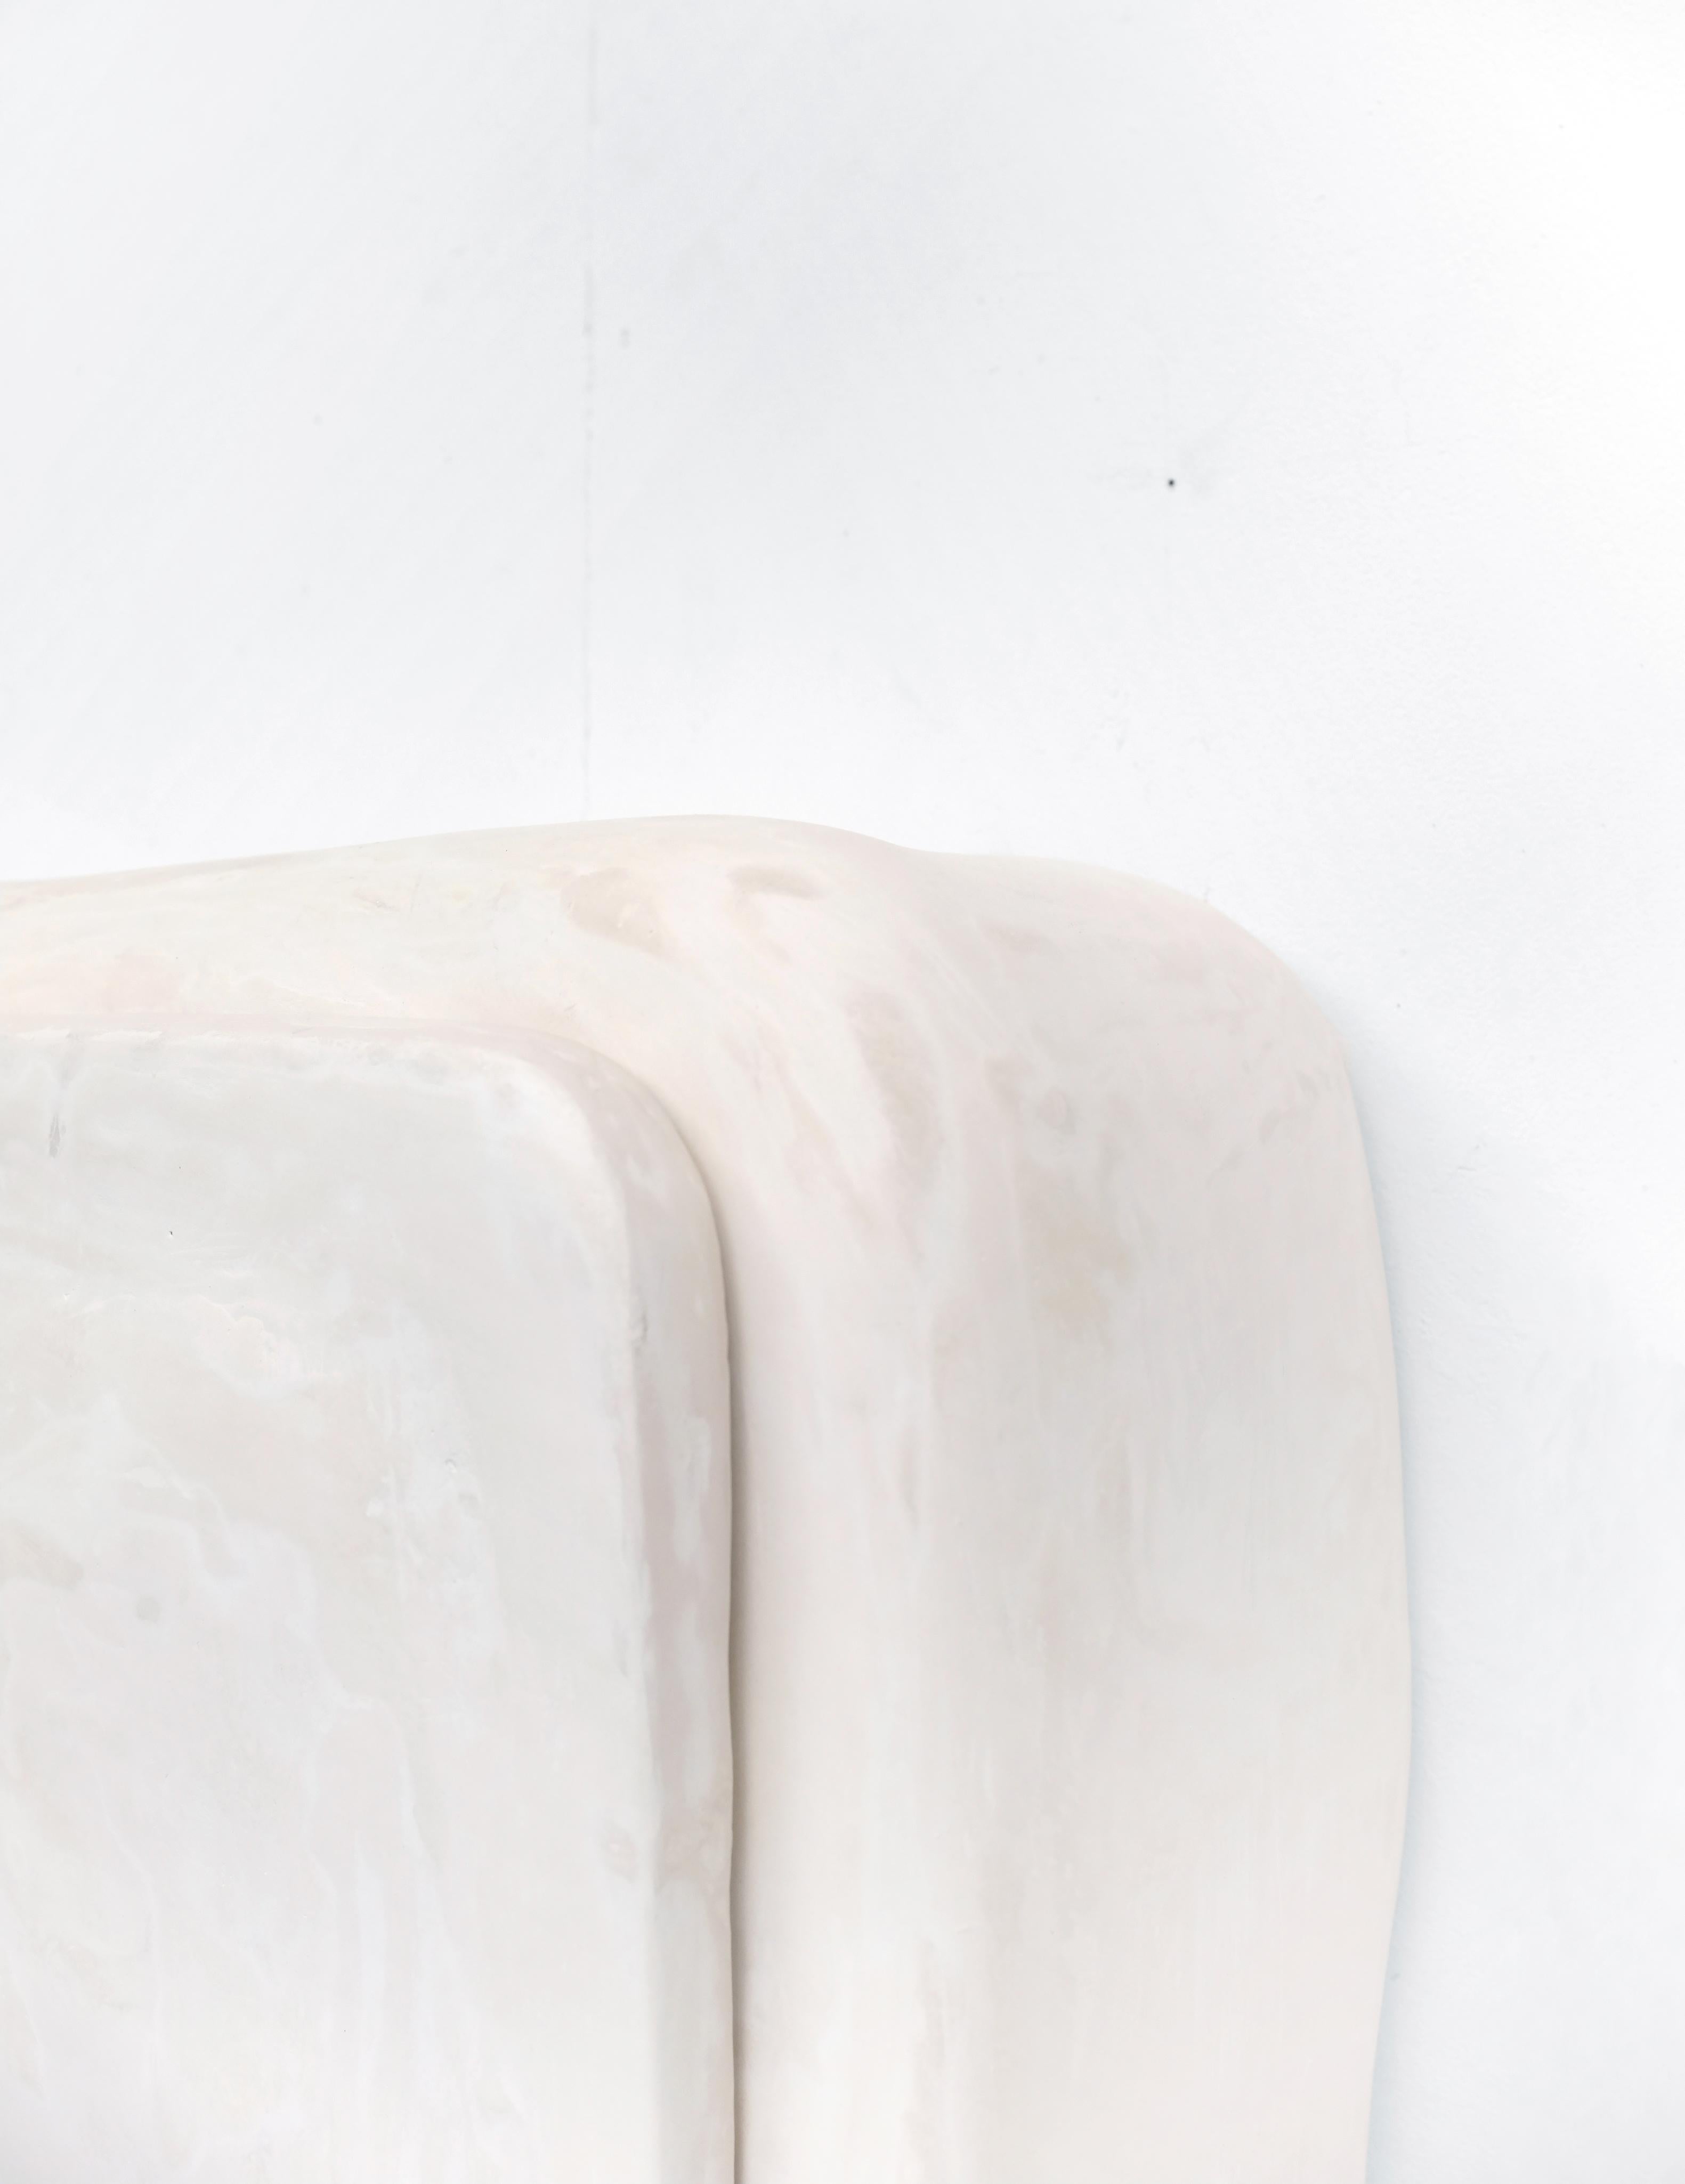 Côme Clérino Contemporary Ceramic Tiled Wall Desk Model 